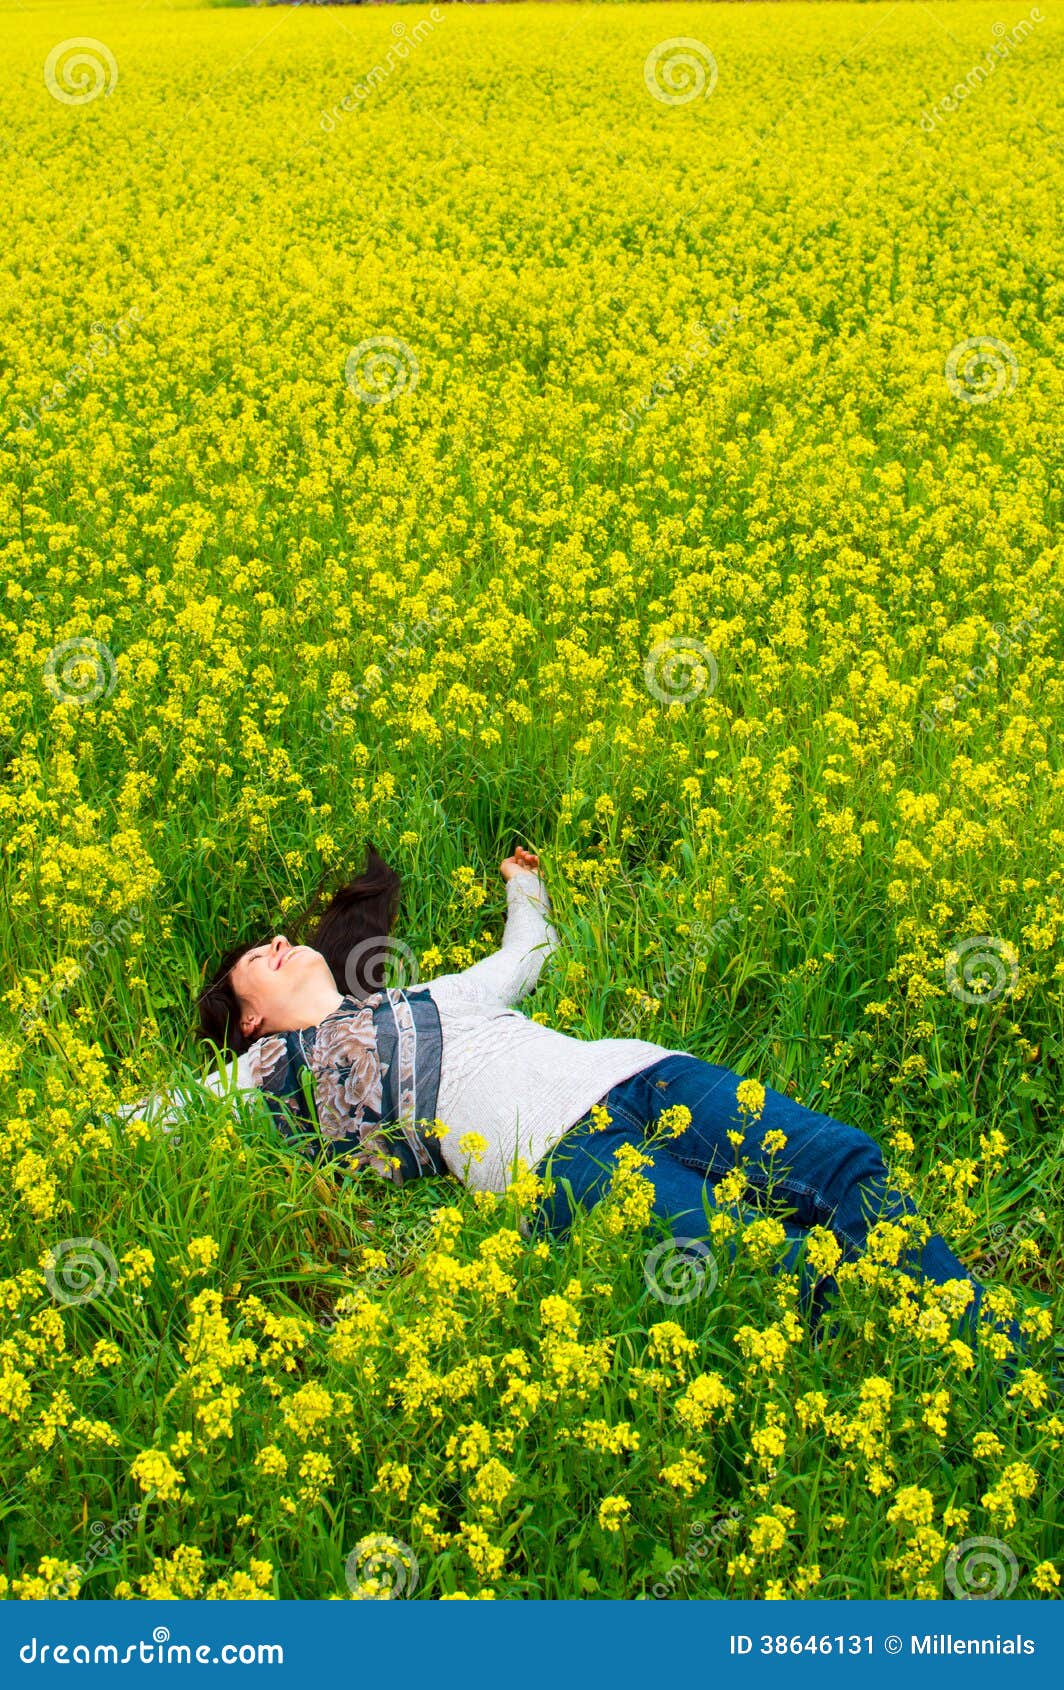 https://thumbs.dreamstime.com/z/happy-relaxed-woman-very-young-flower-field-field-barbarea-vulgaris-true-relaxation-38646131.jpg